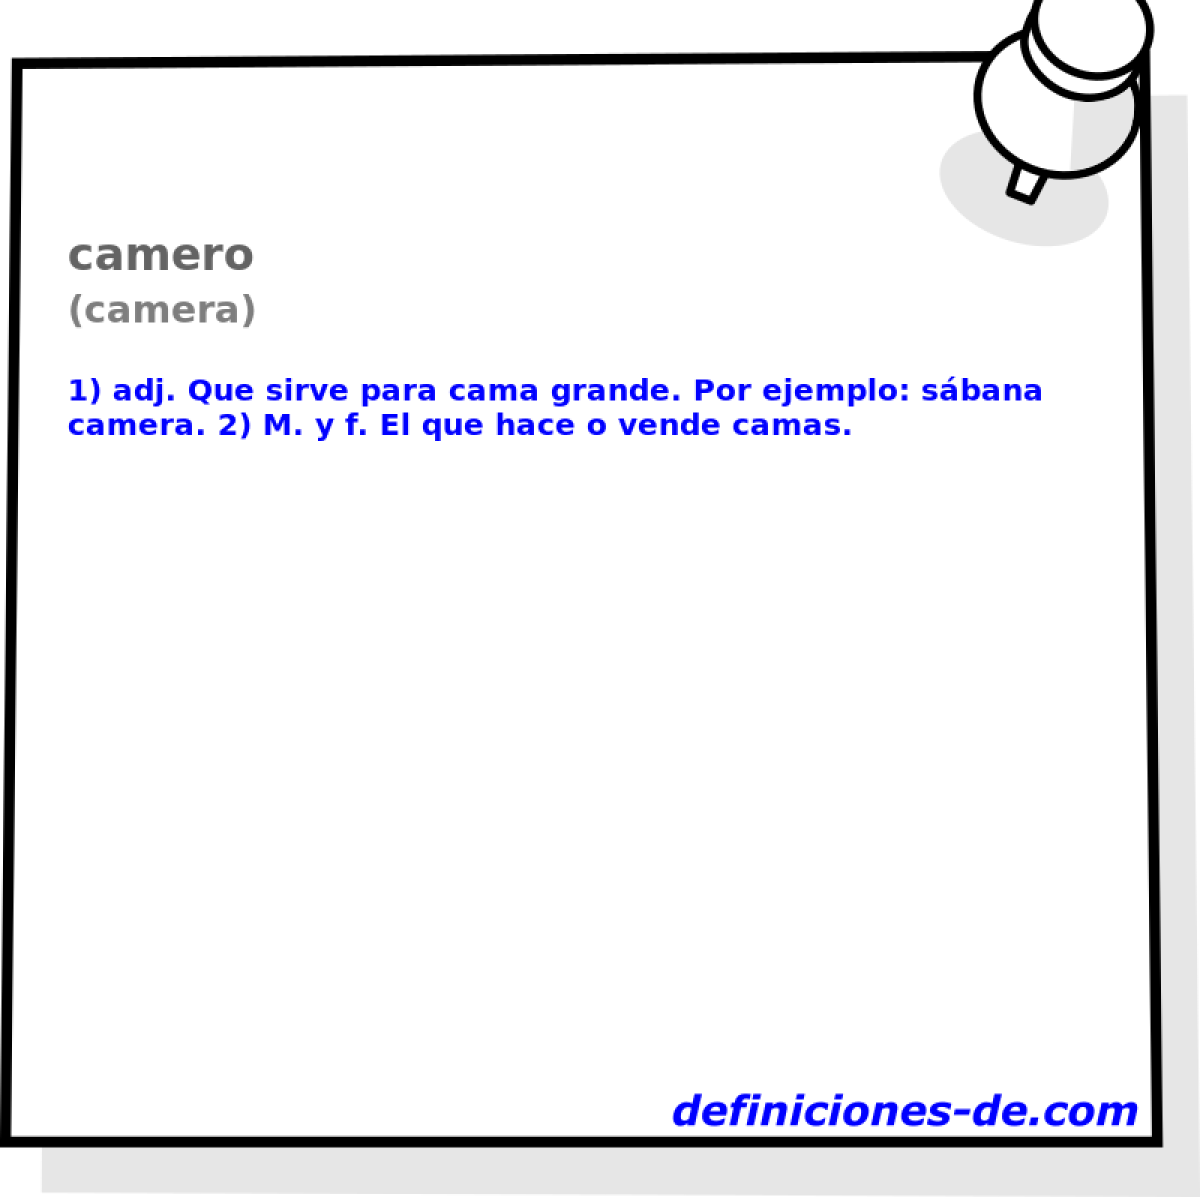 camero (camera)